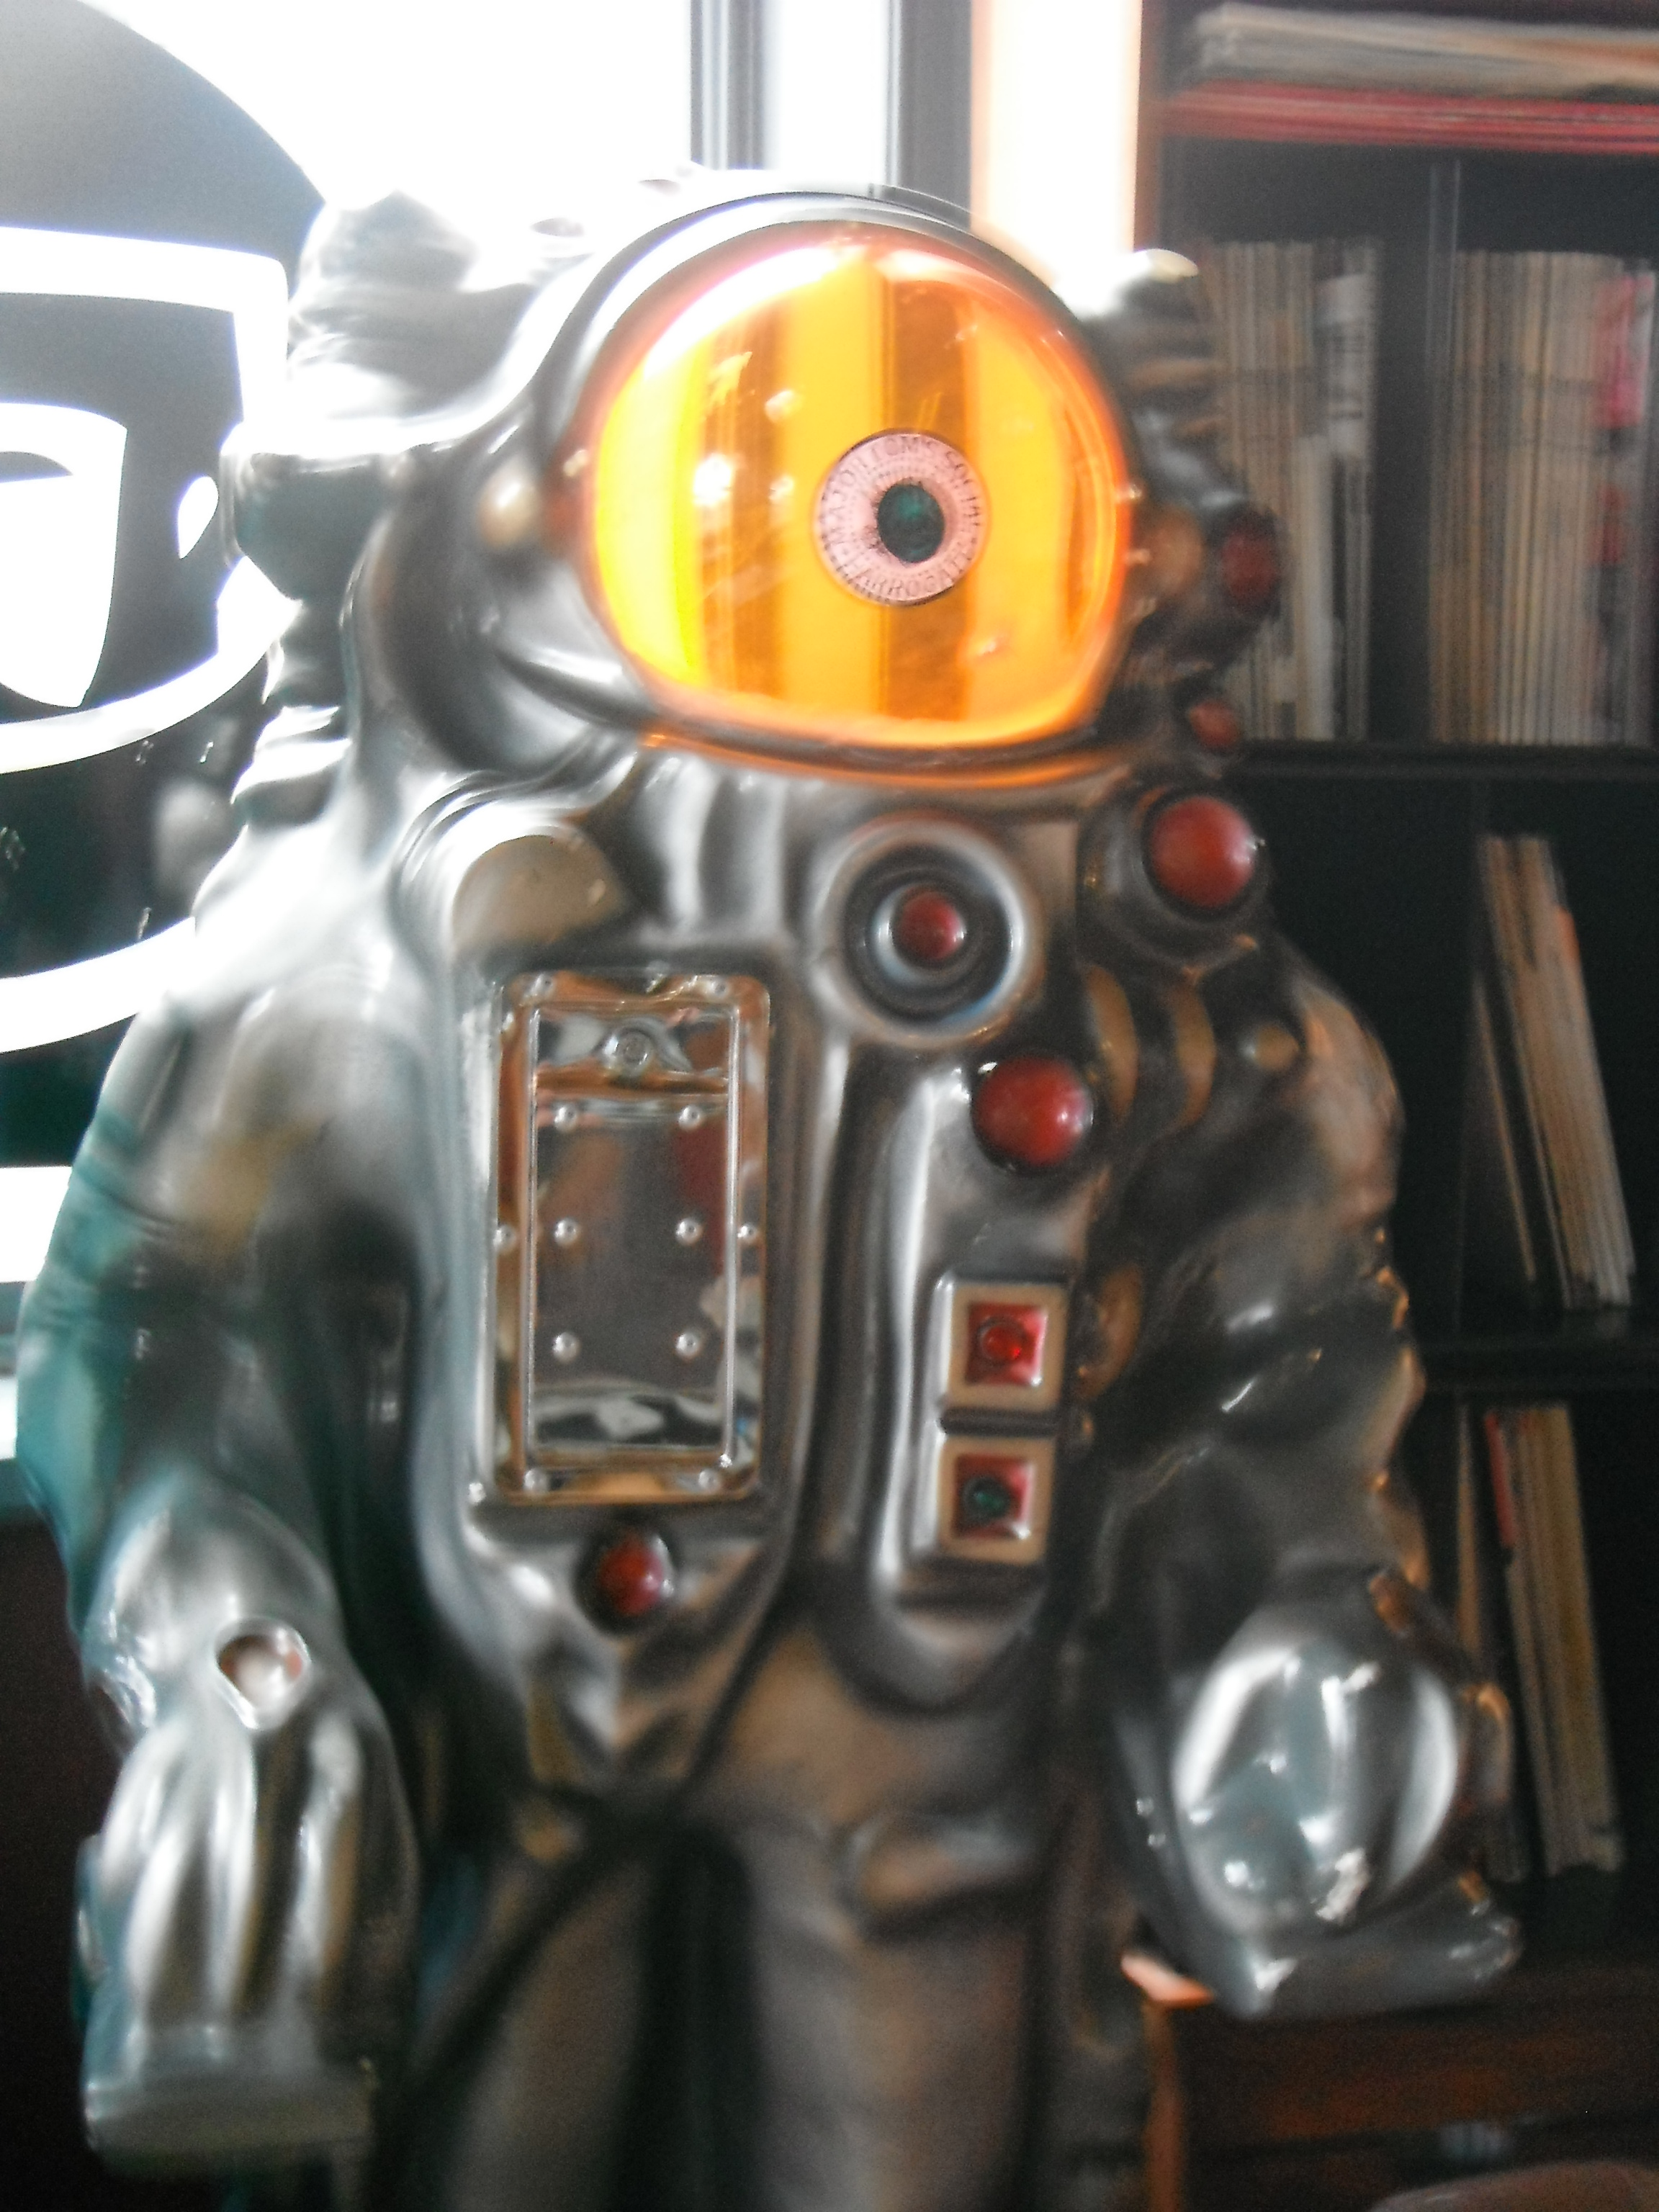 Robot at Major Tom's Social Bar - Harrogate